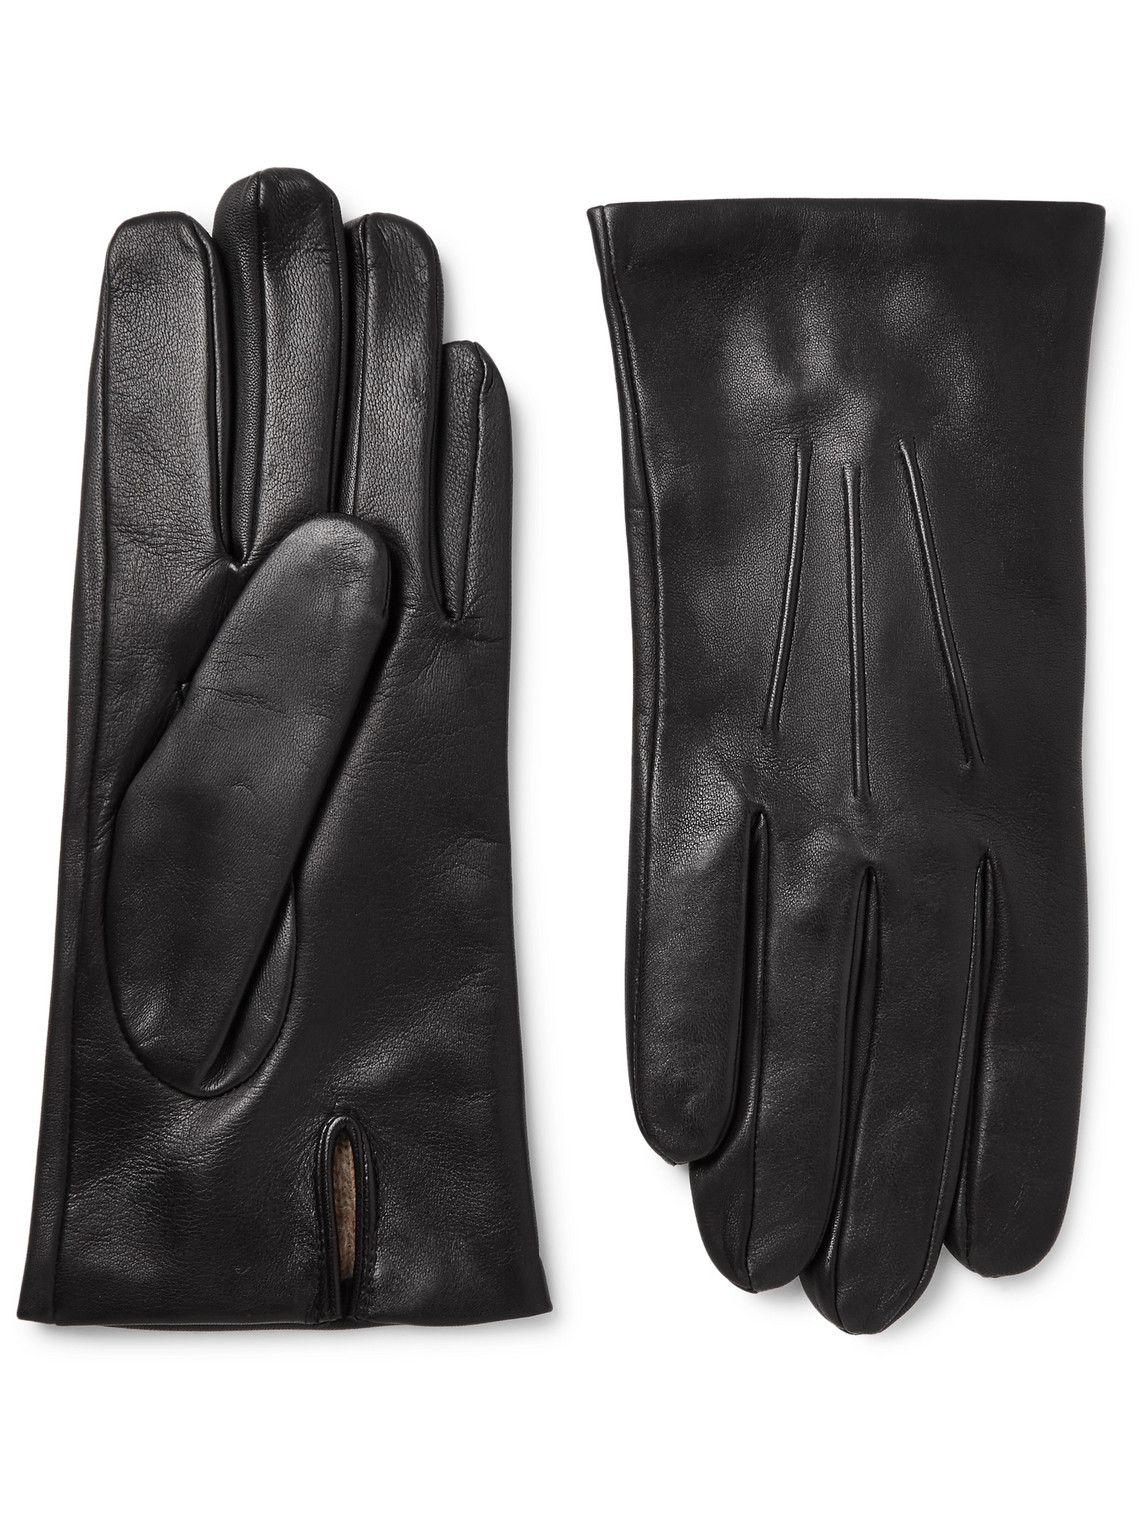 Dents - Bath Cashmere-Lined Leather Gloves - Men - Black - 9 von Dents